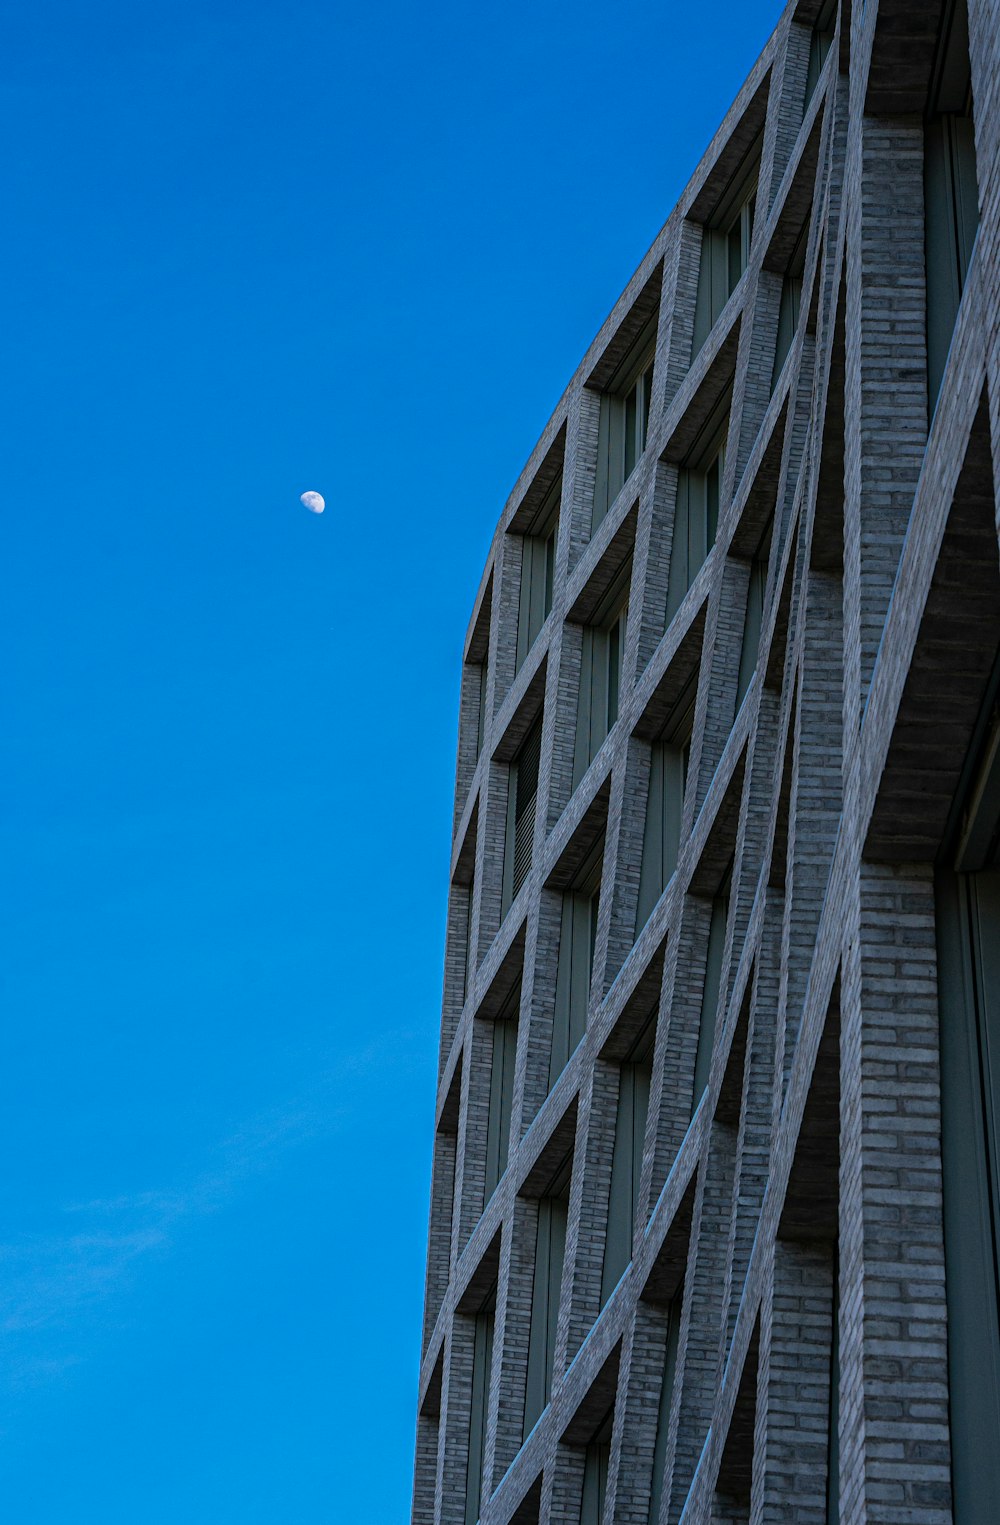 black concrete building under blue sky during daytime